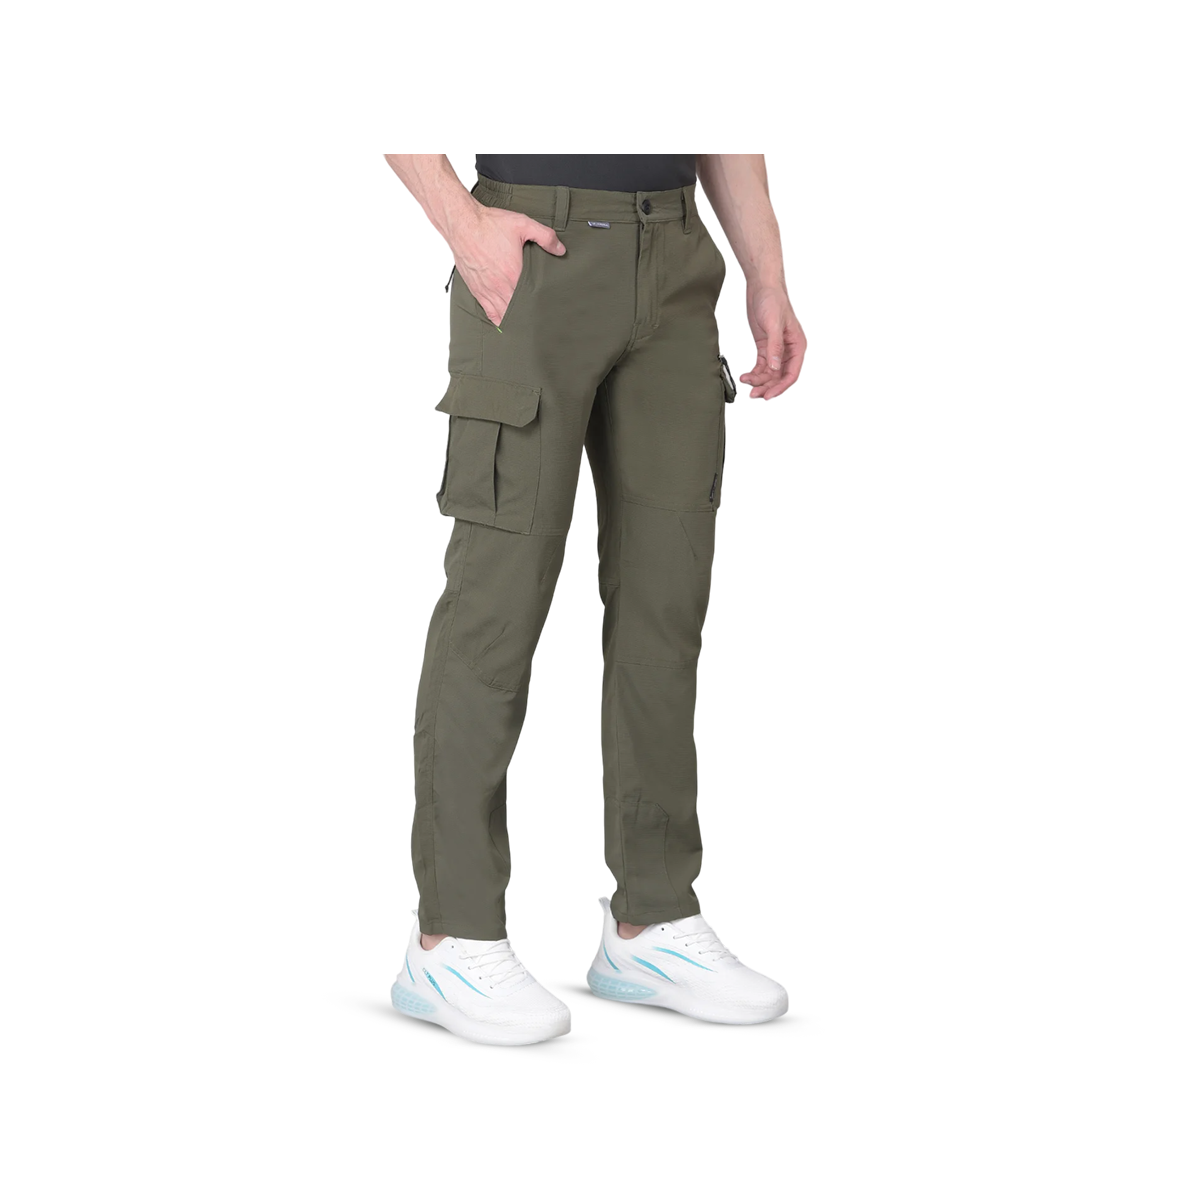 QUADRA Olive Trouser for Stylish Comfort on the Go - XL